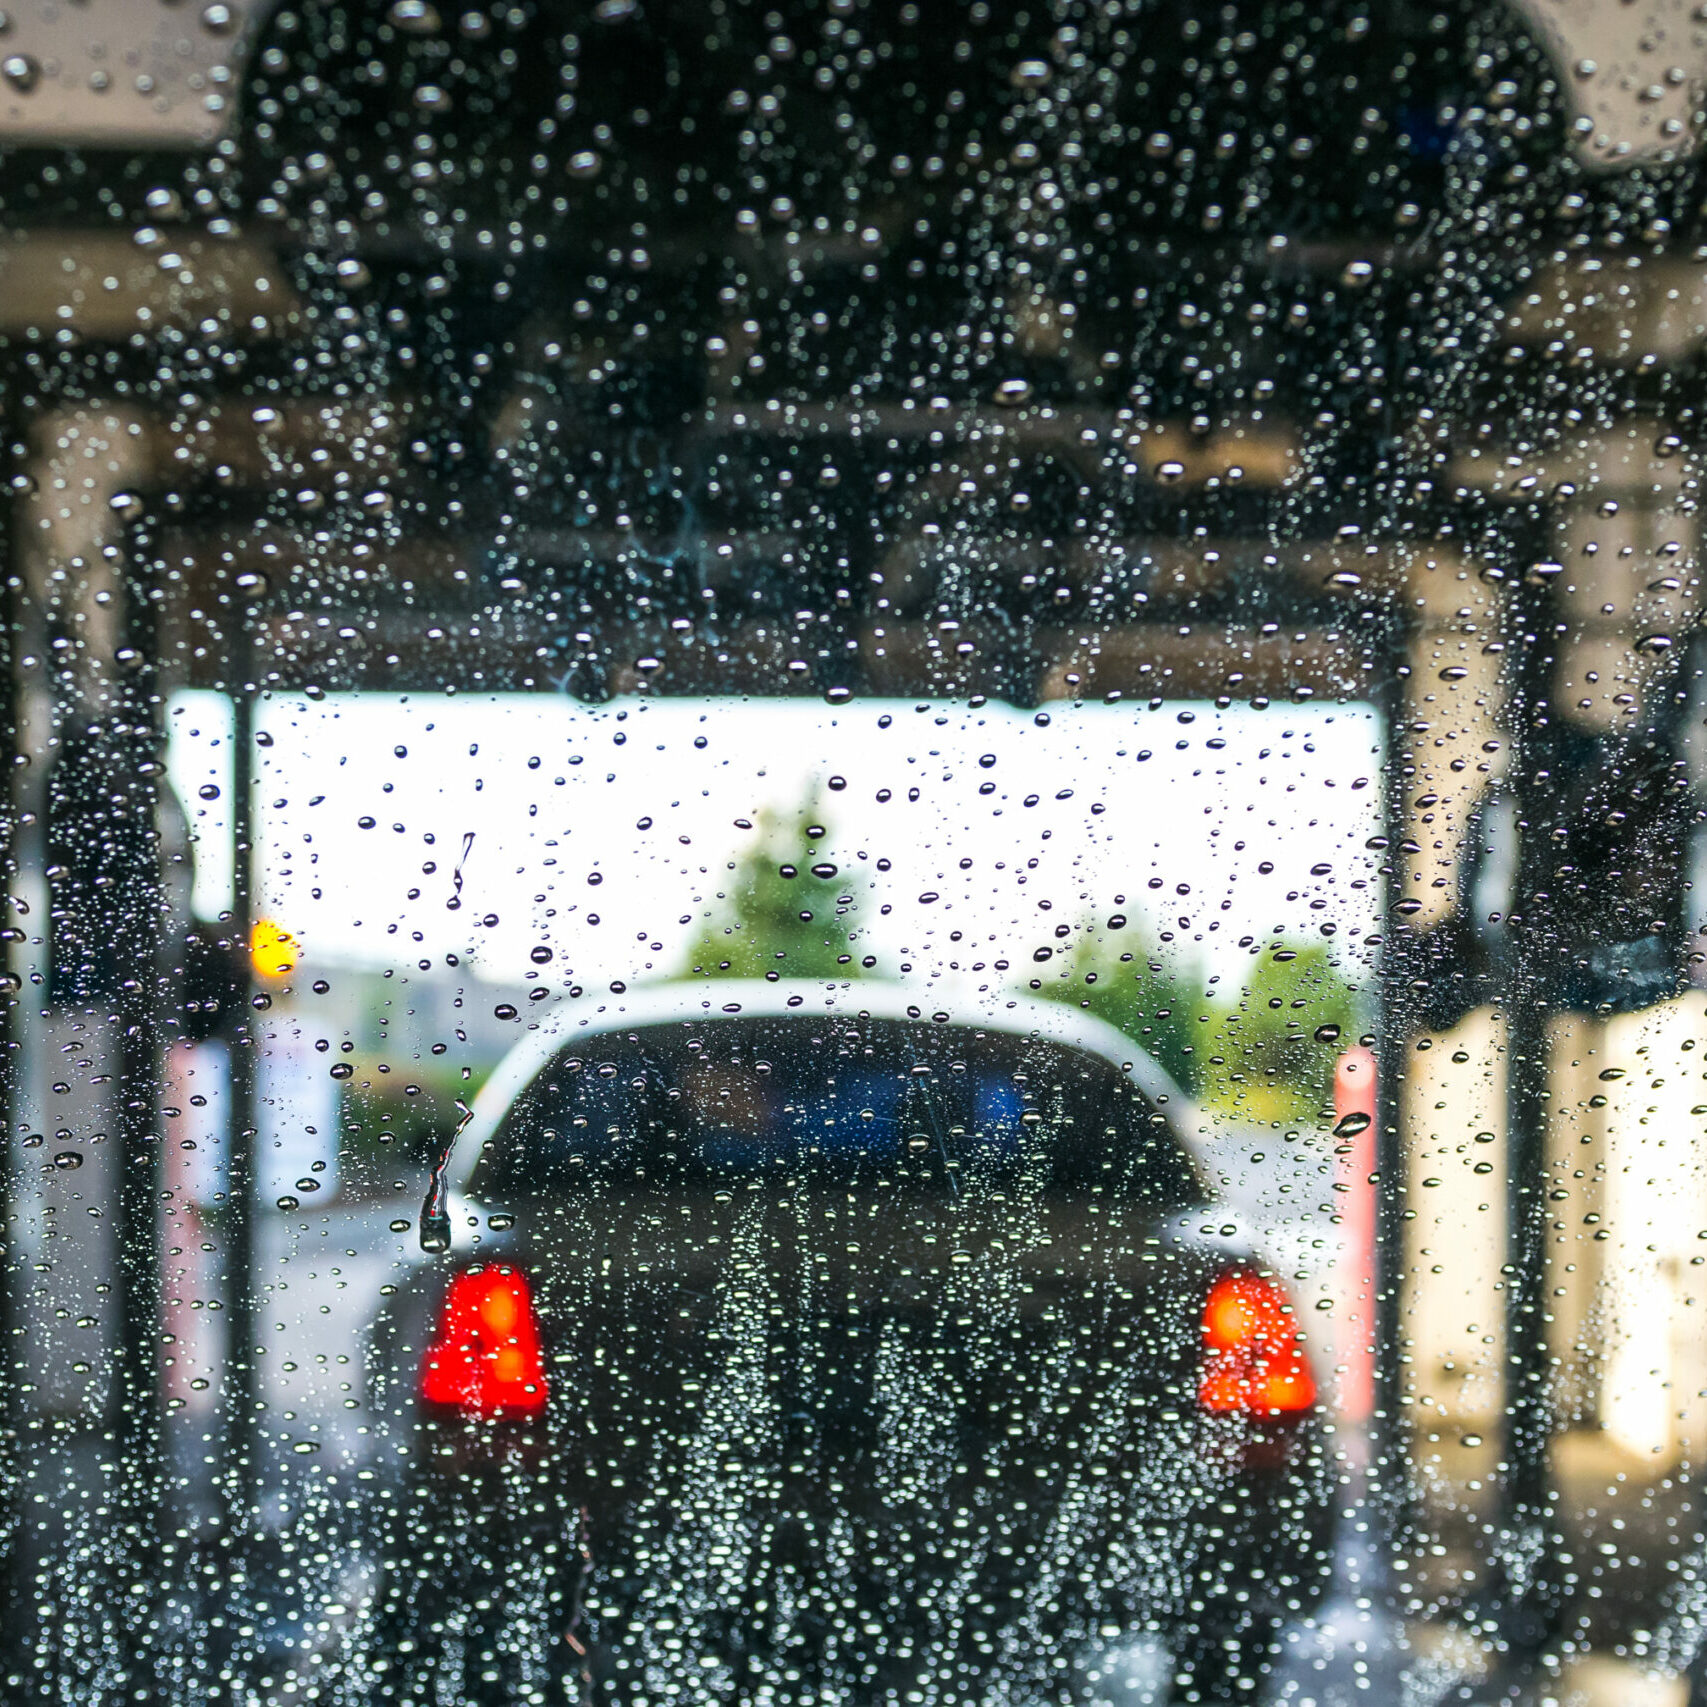 a car Running through automatic car wash.